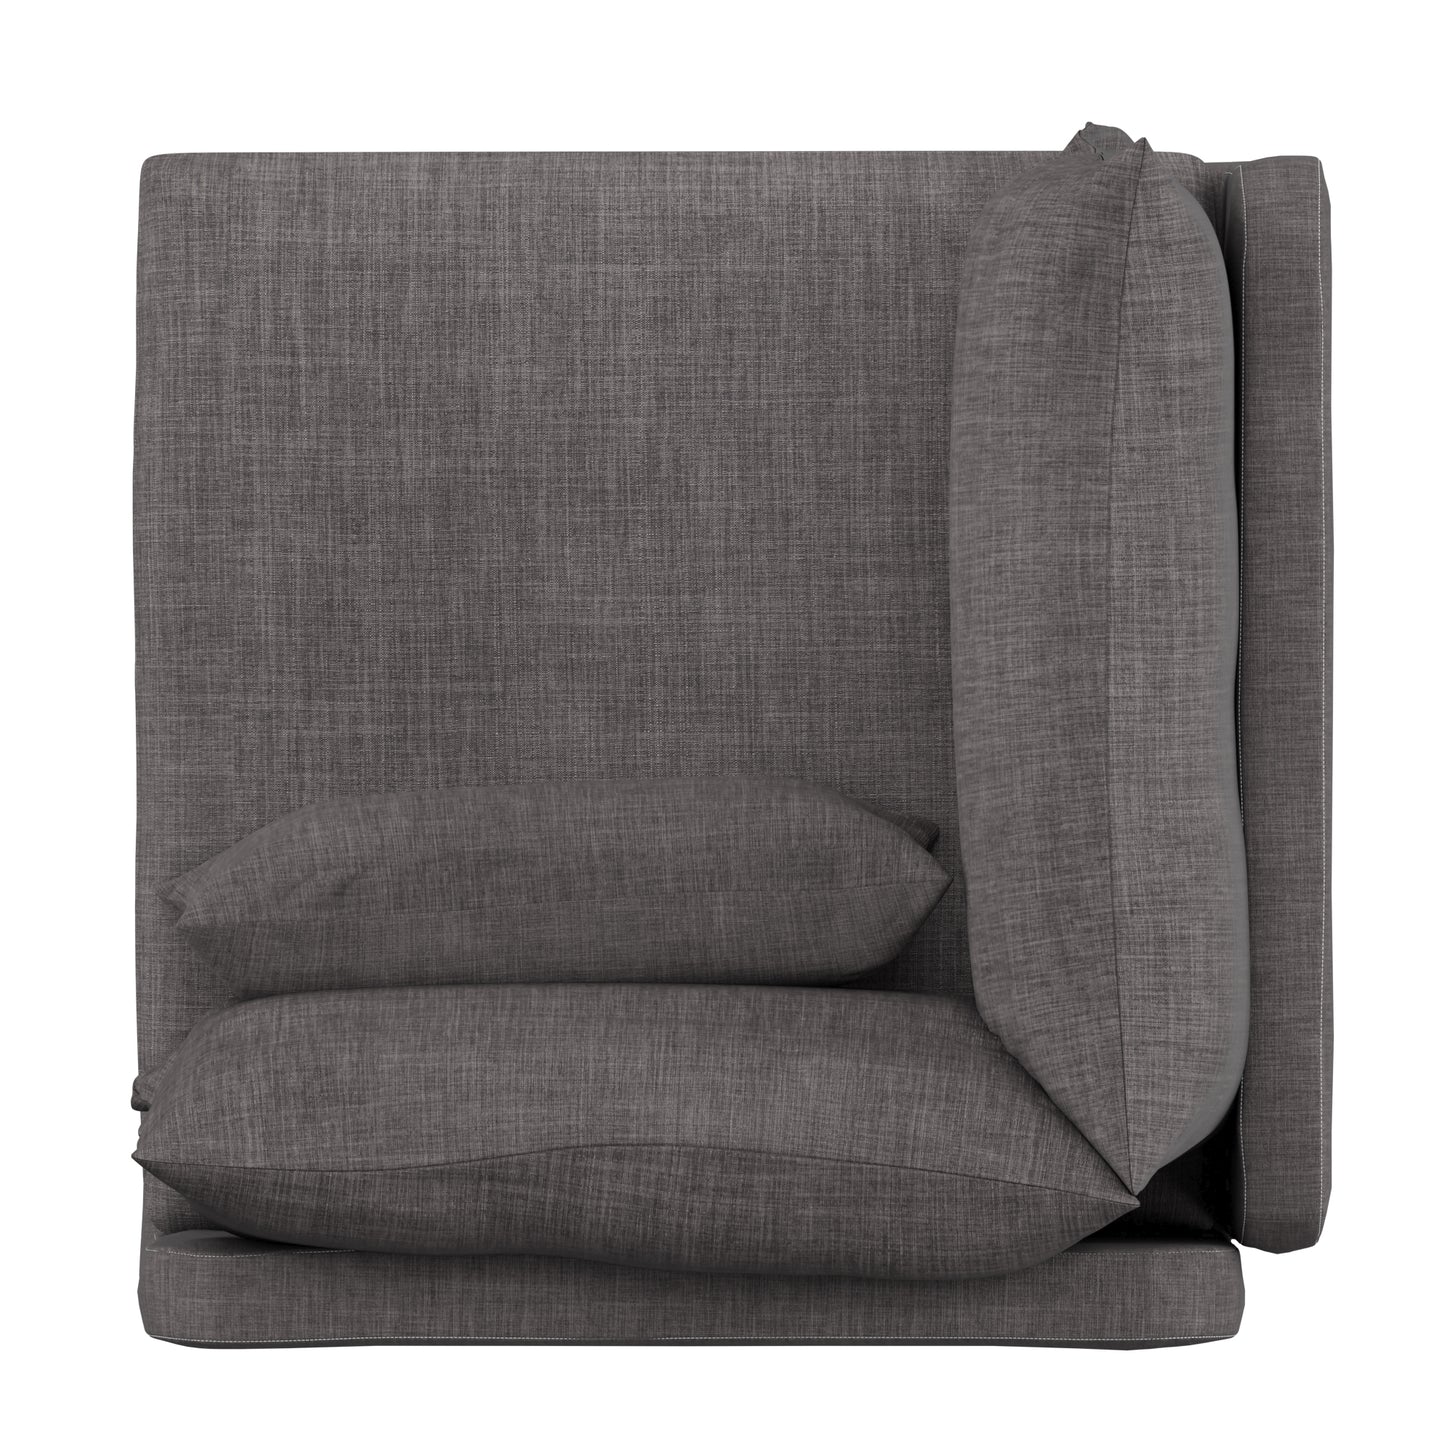 Modular Mid-Century Living Room Seating - Dark Grey Linen, Corner Chair